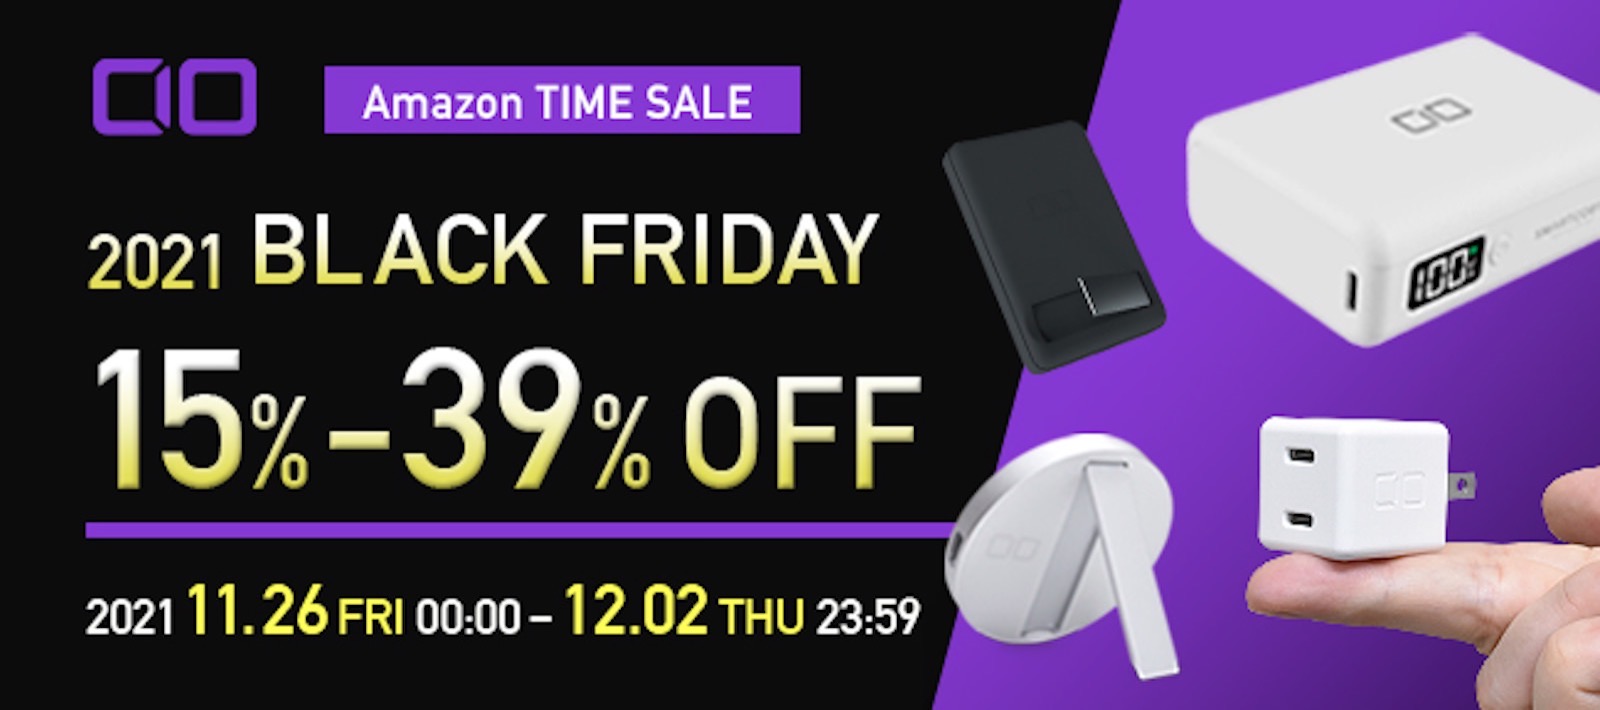 CIO Amazon Black Friday Sale